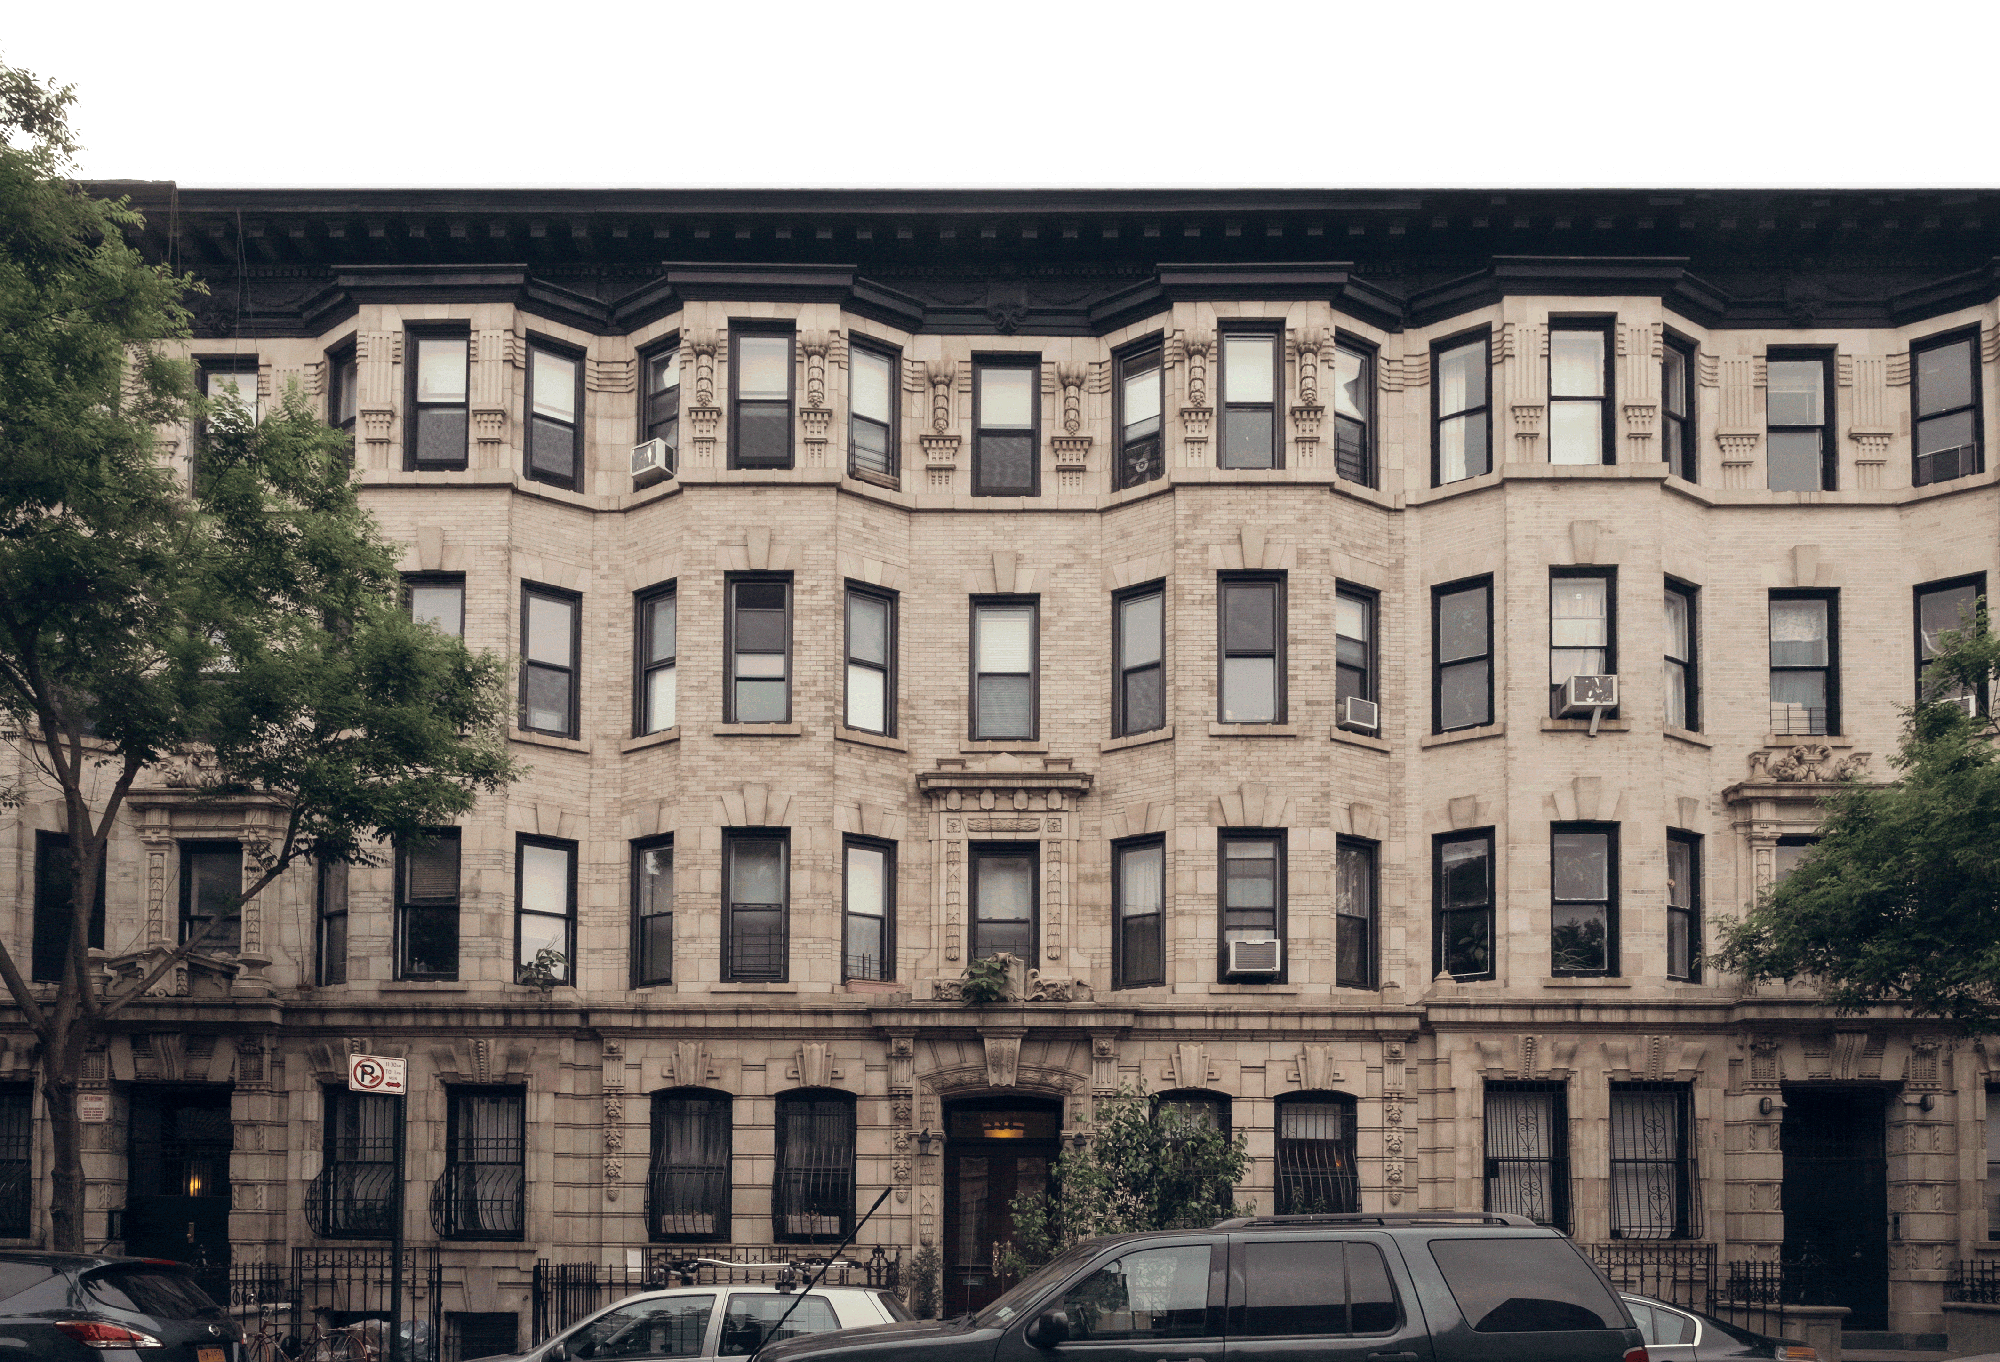 The Brooklyn, NY apartment building where legendary hip hop artist, Christopher 